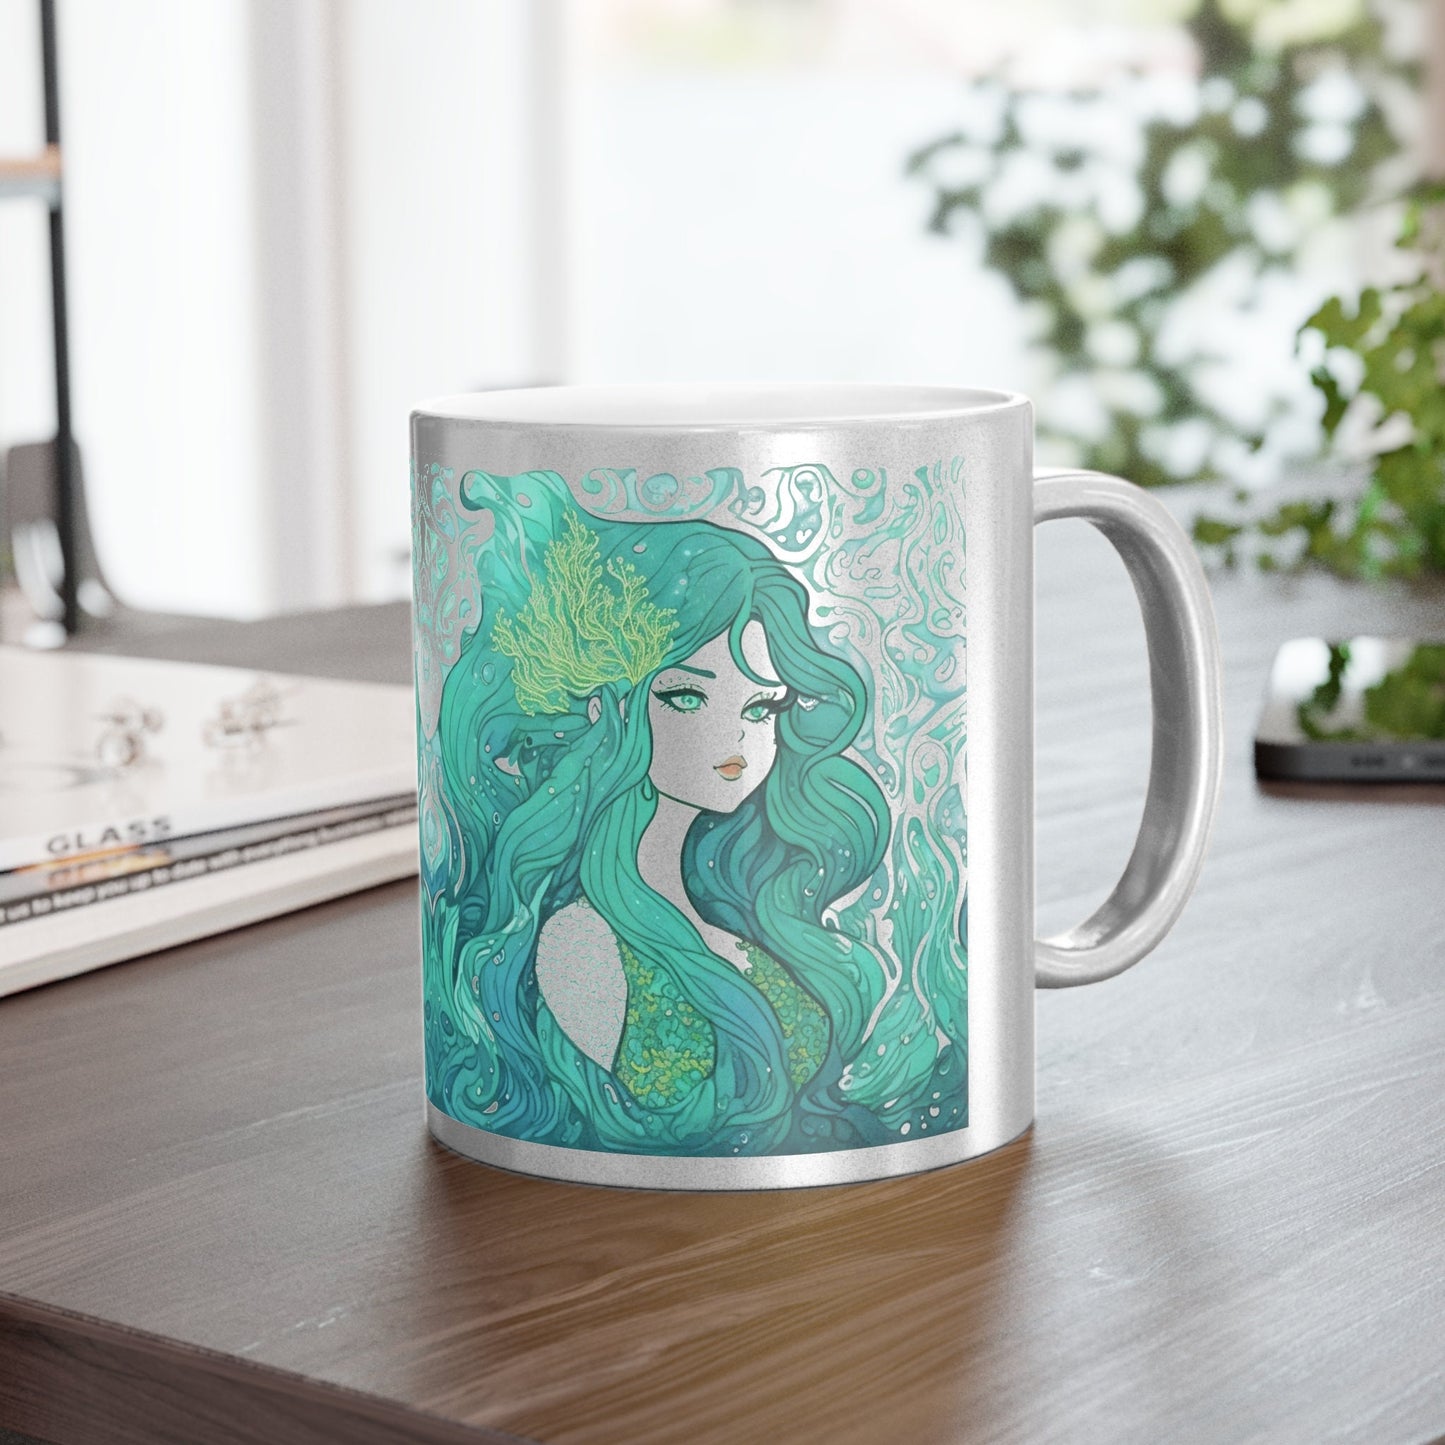 Metallic Mermaid Mug Gift Gold Mermaid Silver Mug Blue Mermaid Background Mug Sirens Mermaids Gift Art Nouveau Mermaid Aesthetic Gift Mug #1